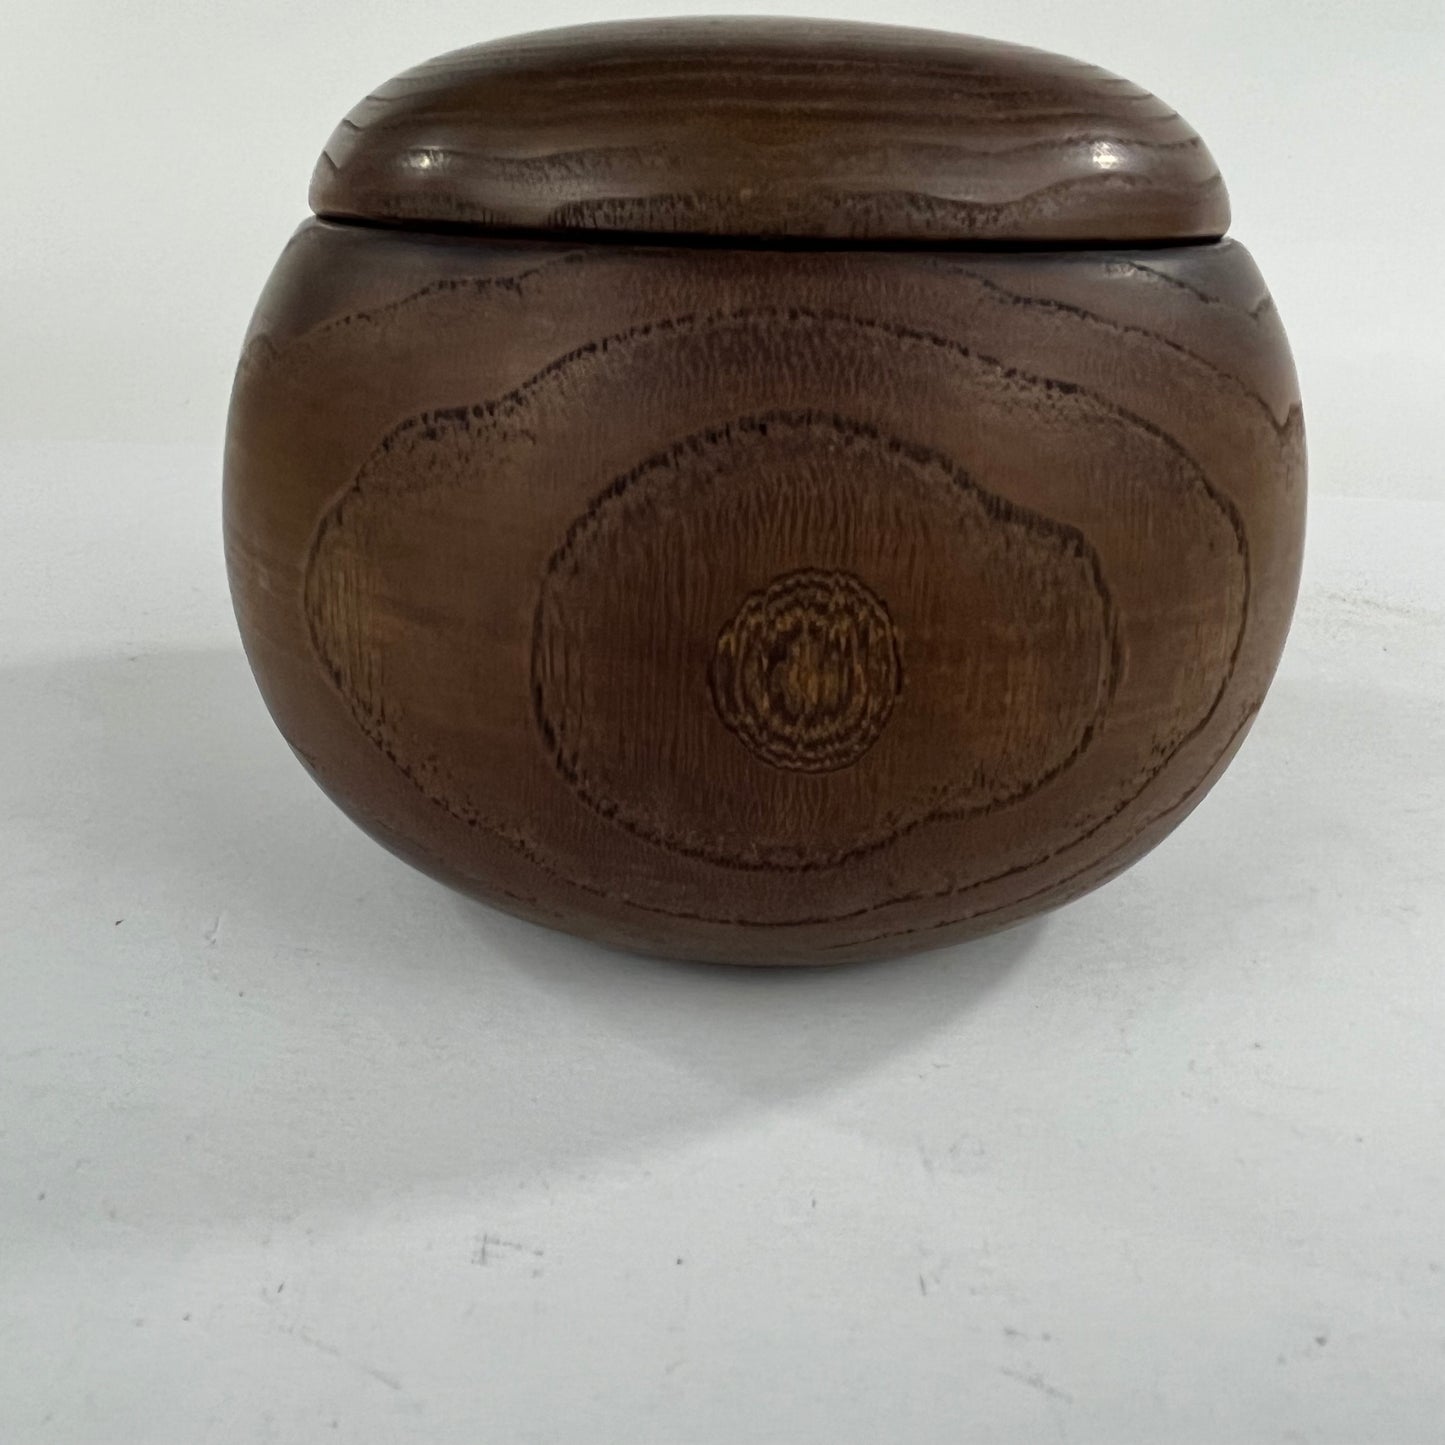 Vintage Round Wooden Lidded Box Bowls 5”